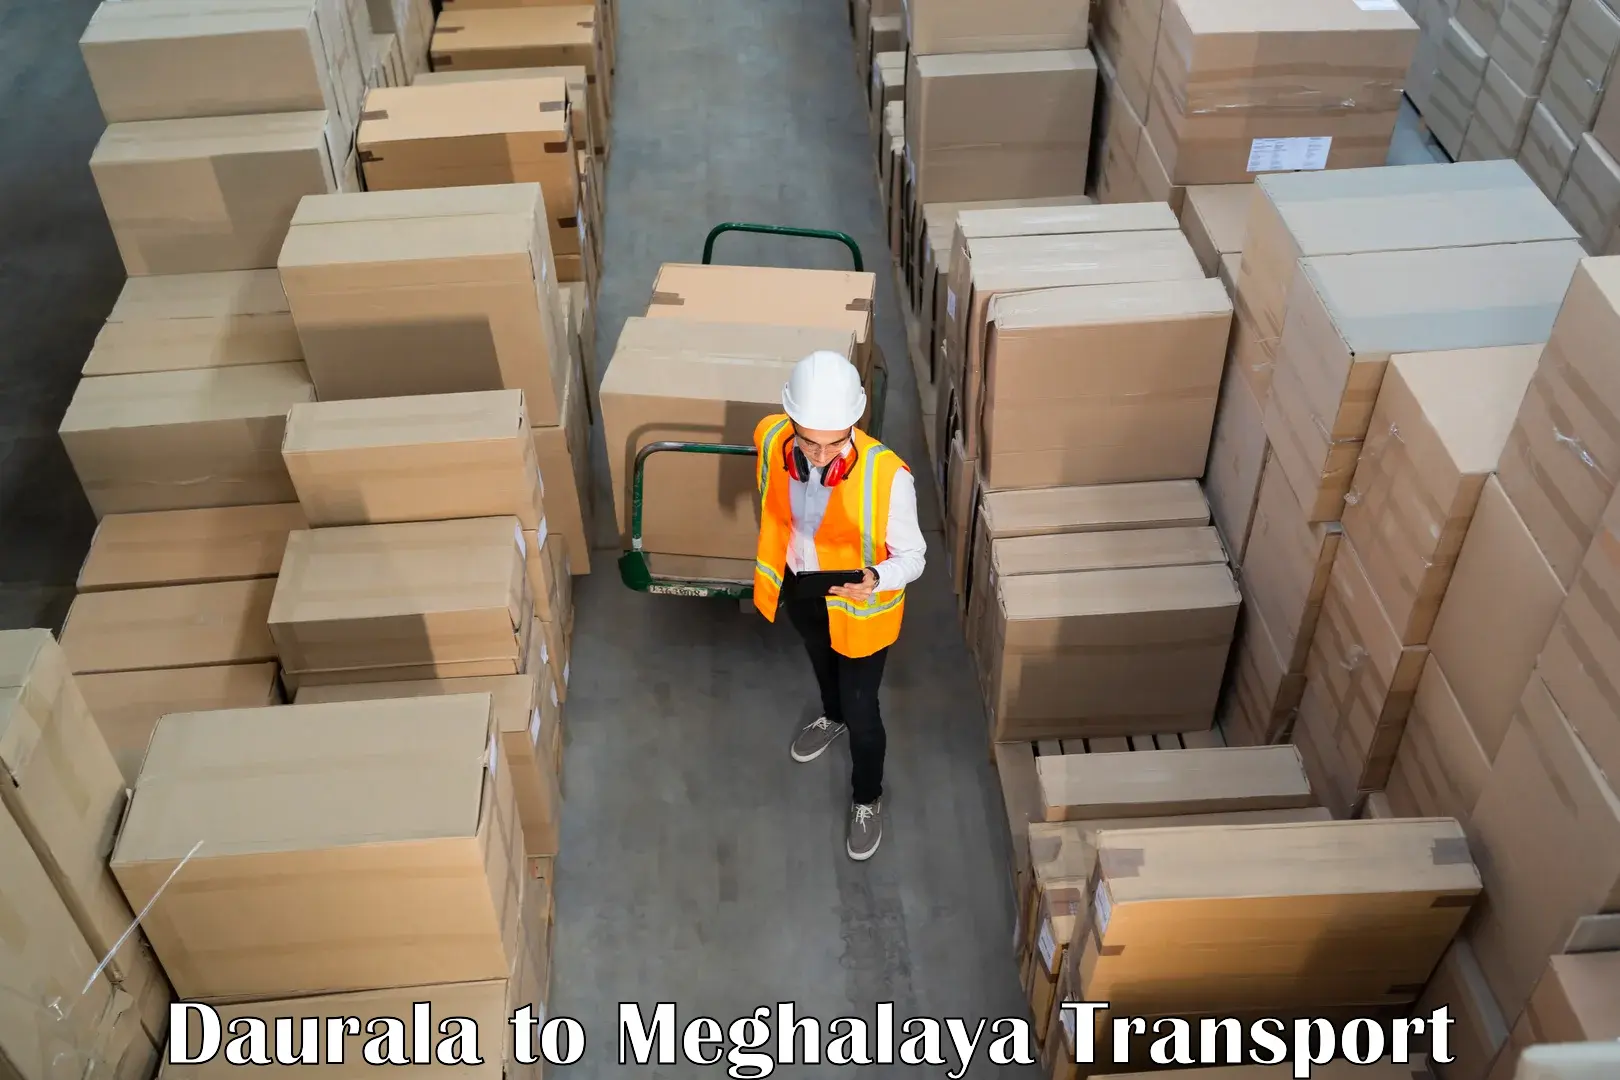 Goods delivery service Daurala to Meghalaya